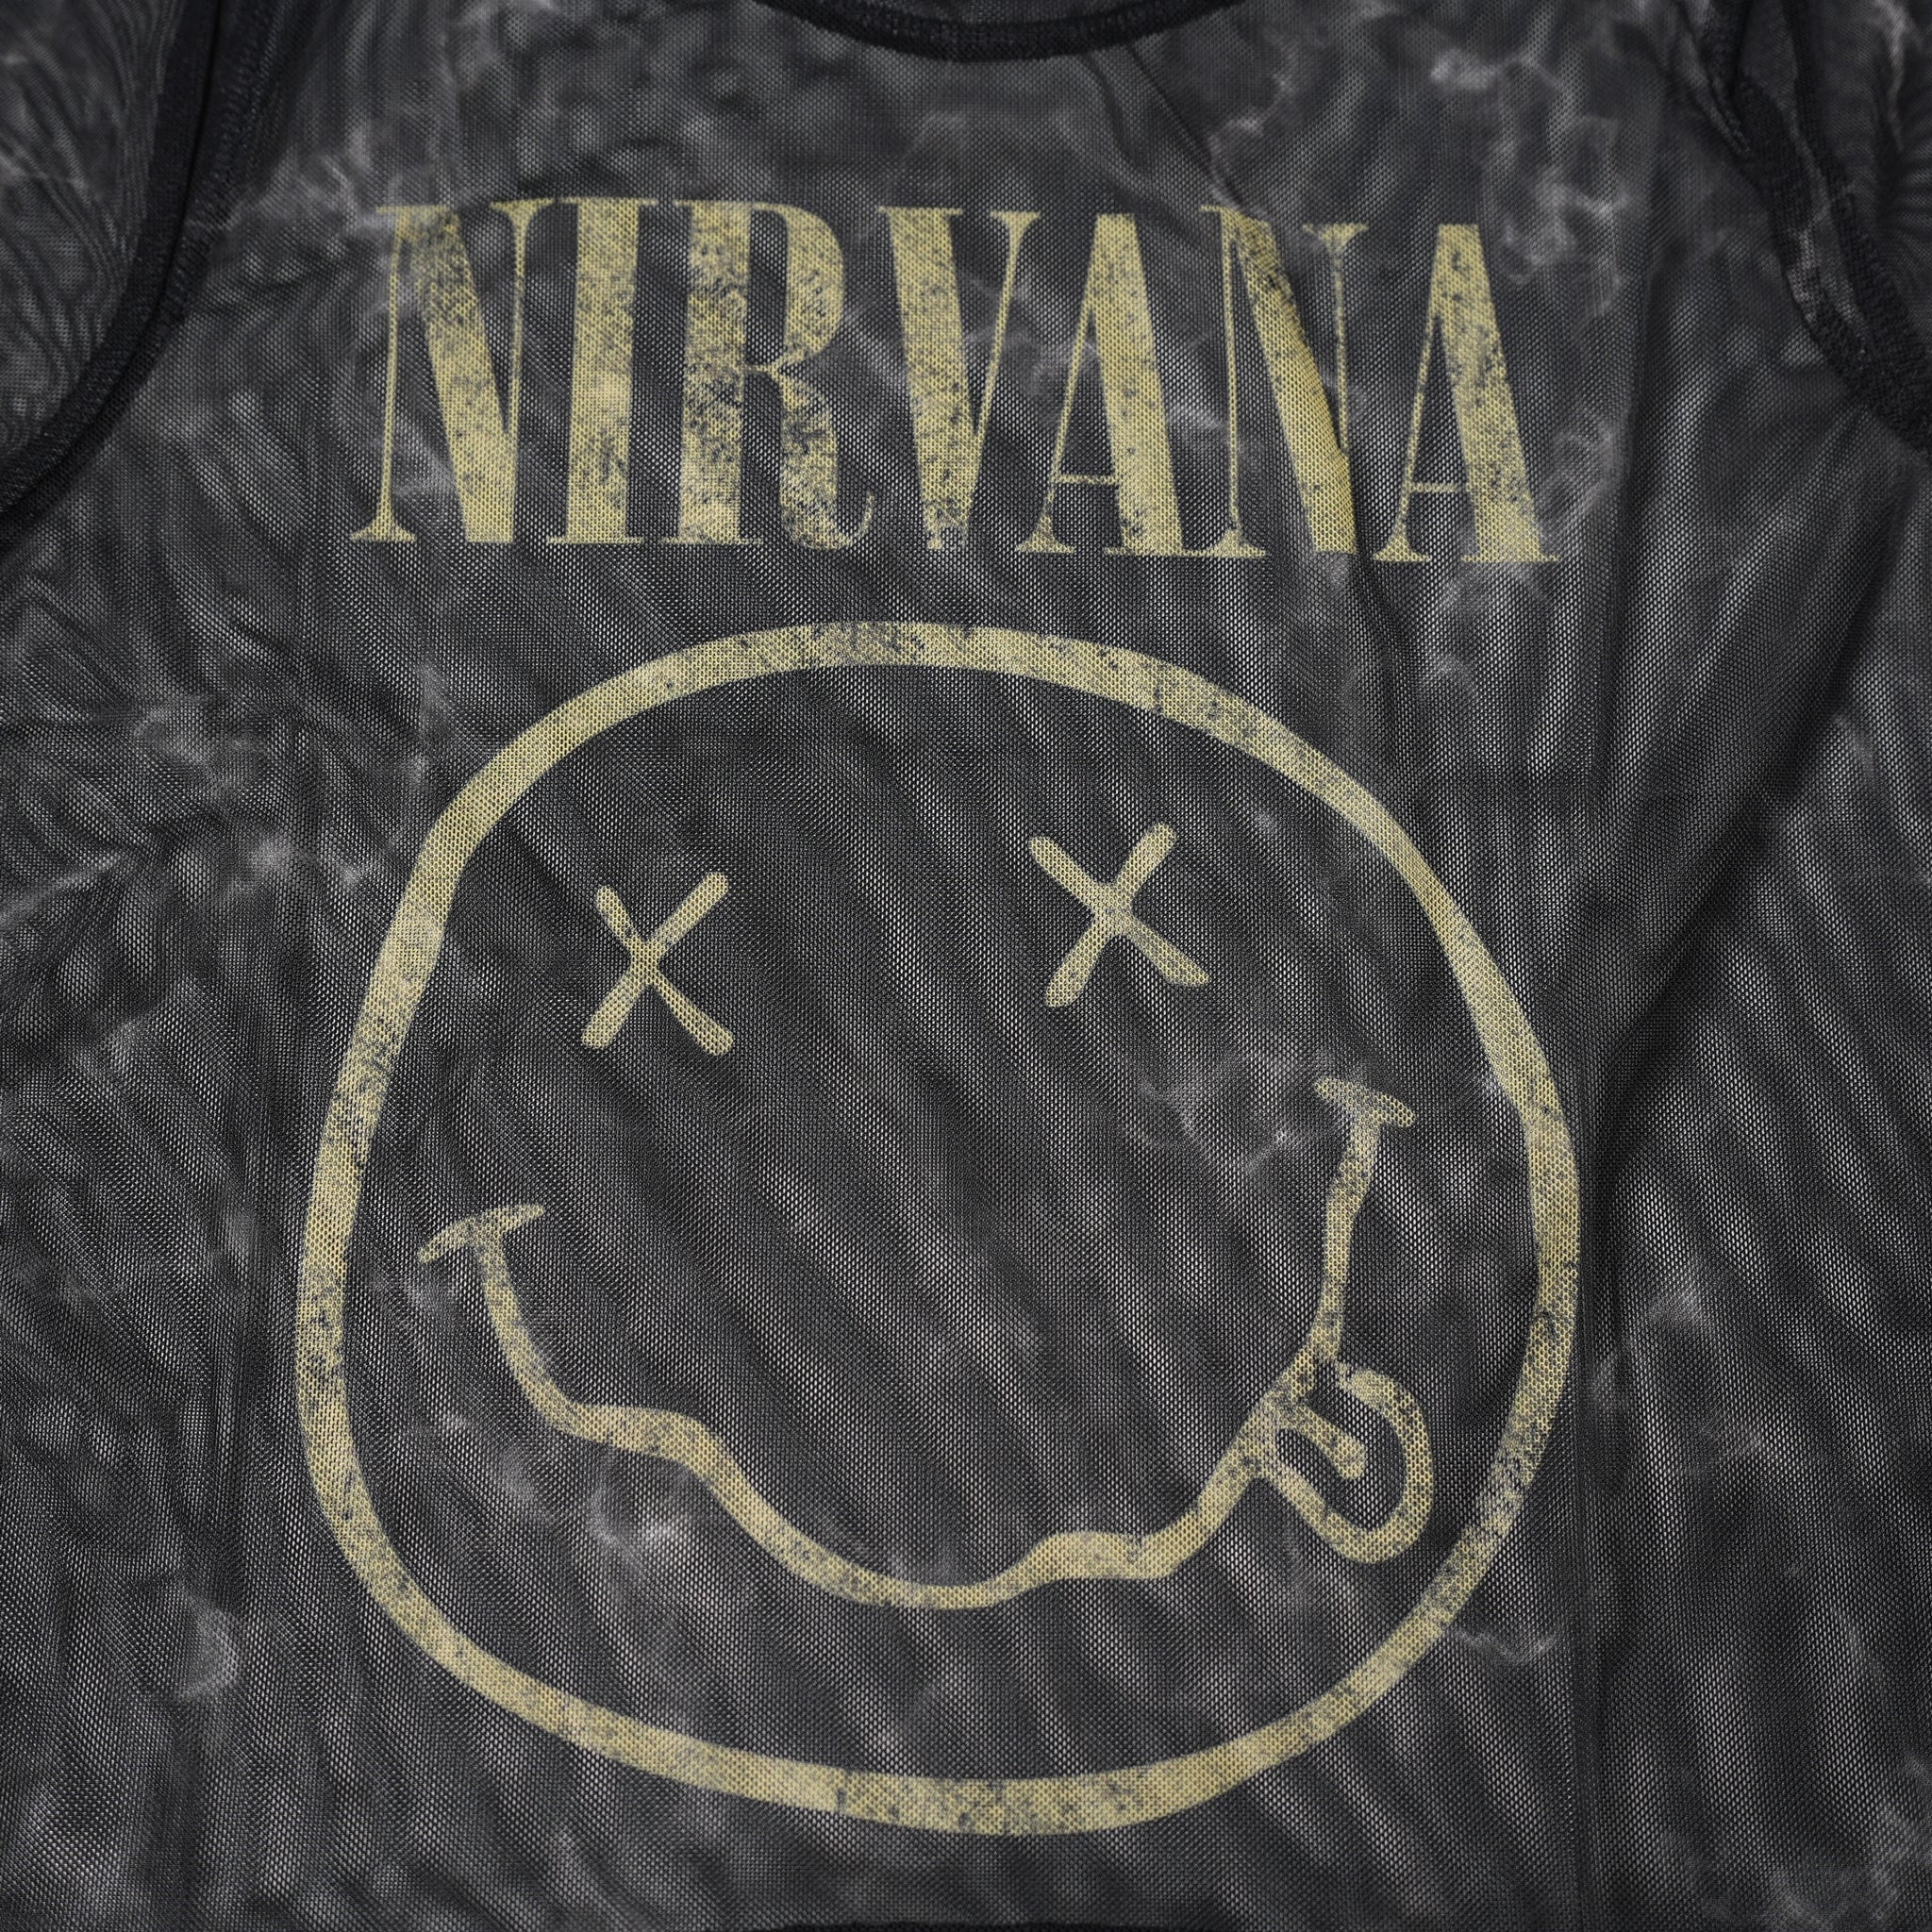 Name:Nirvana_Yellow Smiley_Lady_BL_Mesh Crop【ROCK OFF】【ネコポス選択可能】